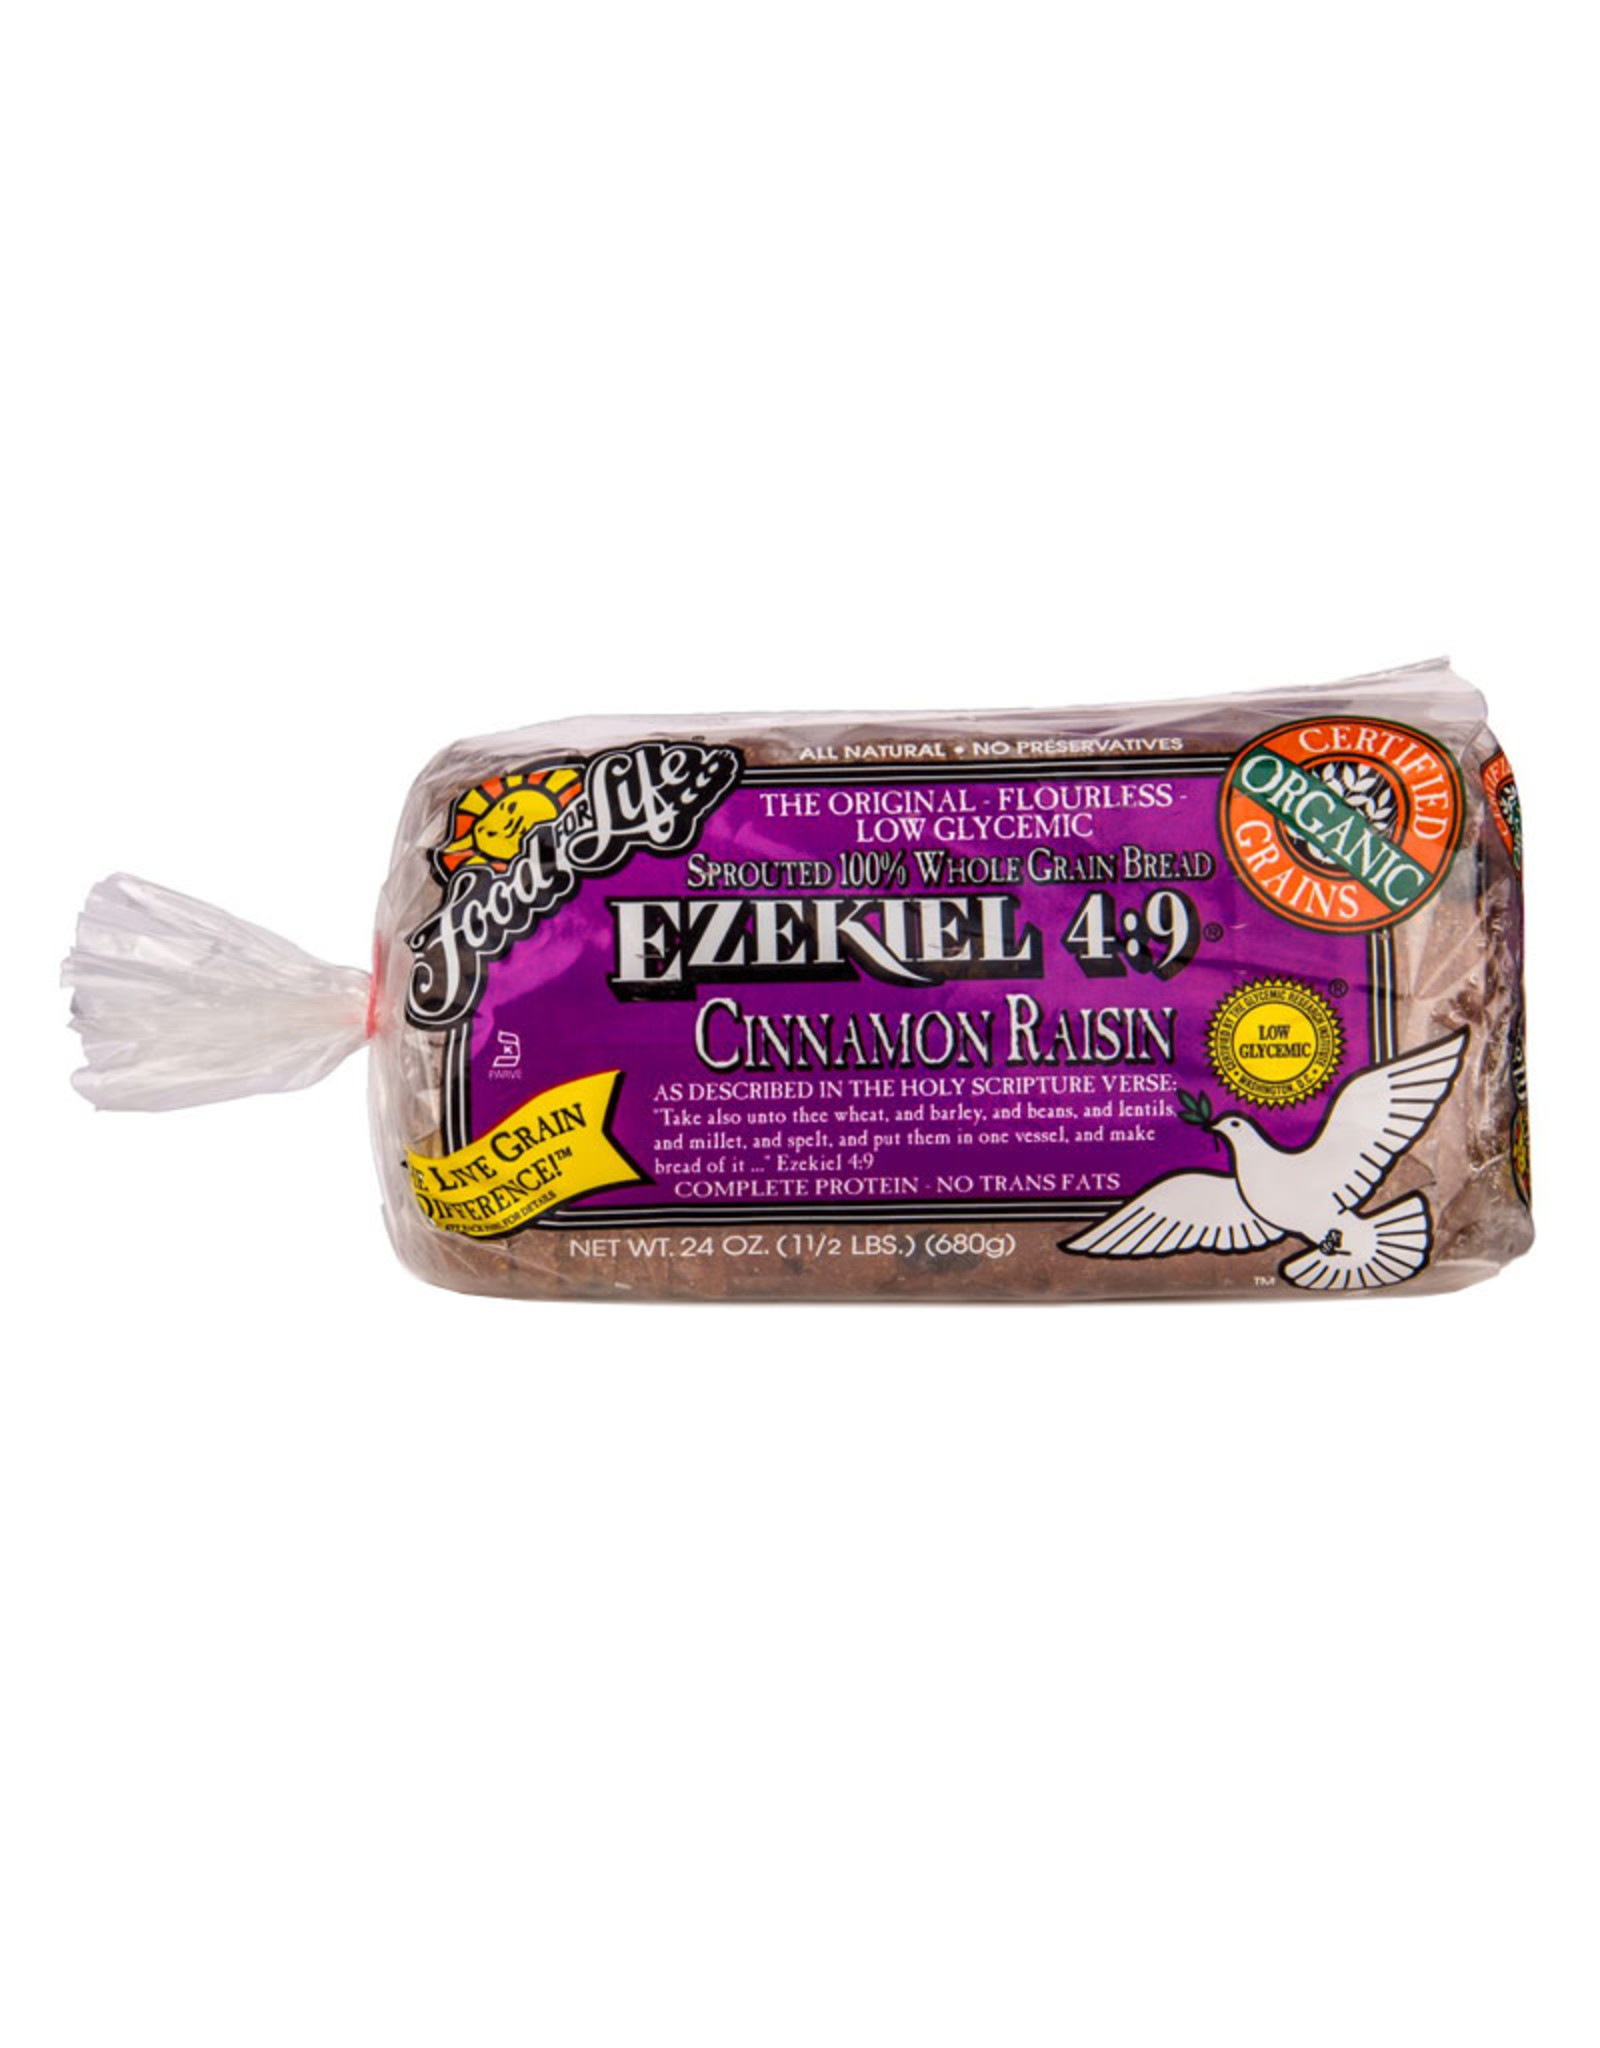 Food For Life FFL - Ezekiel 4:9 Bread, Cinnamon Raisin